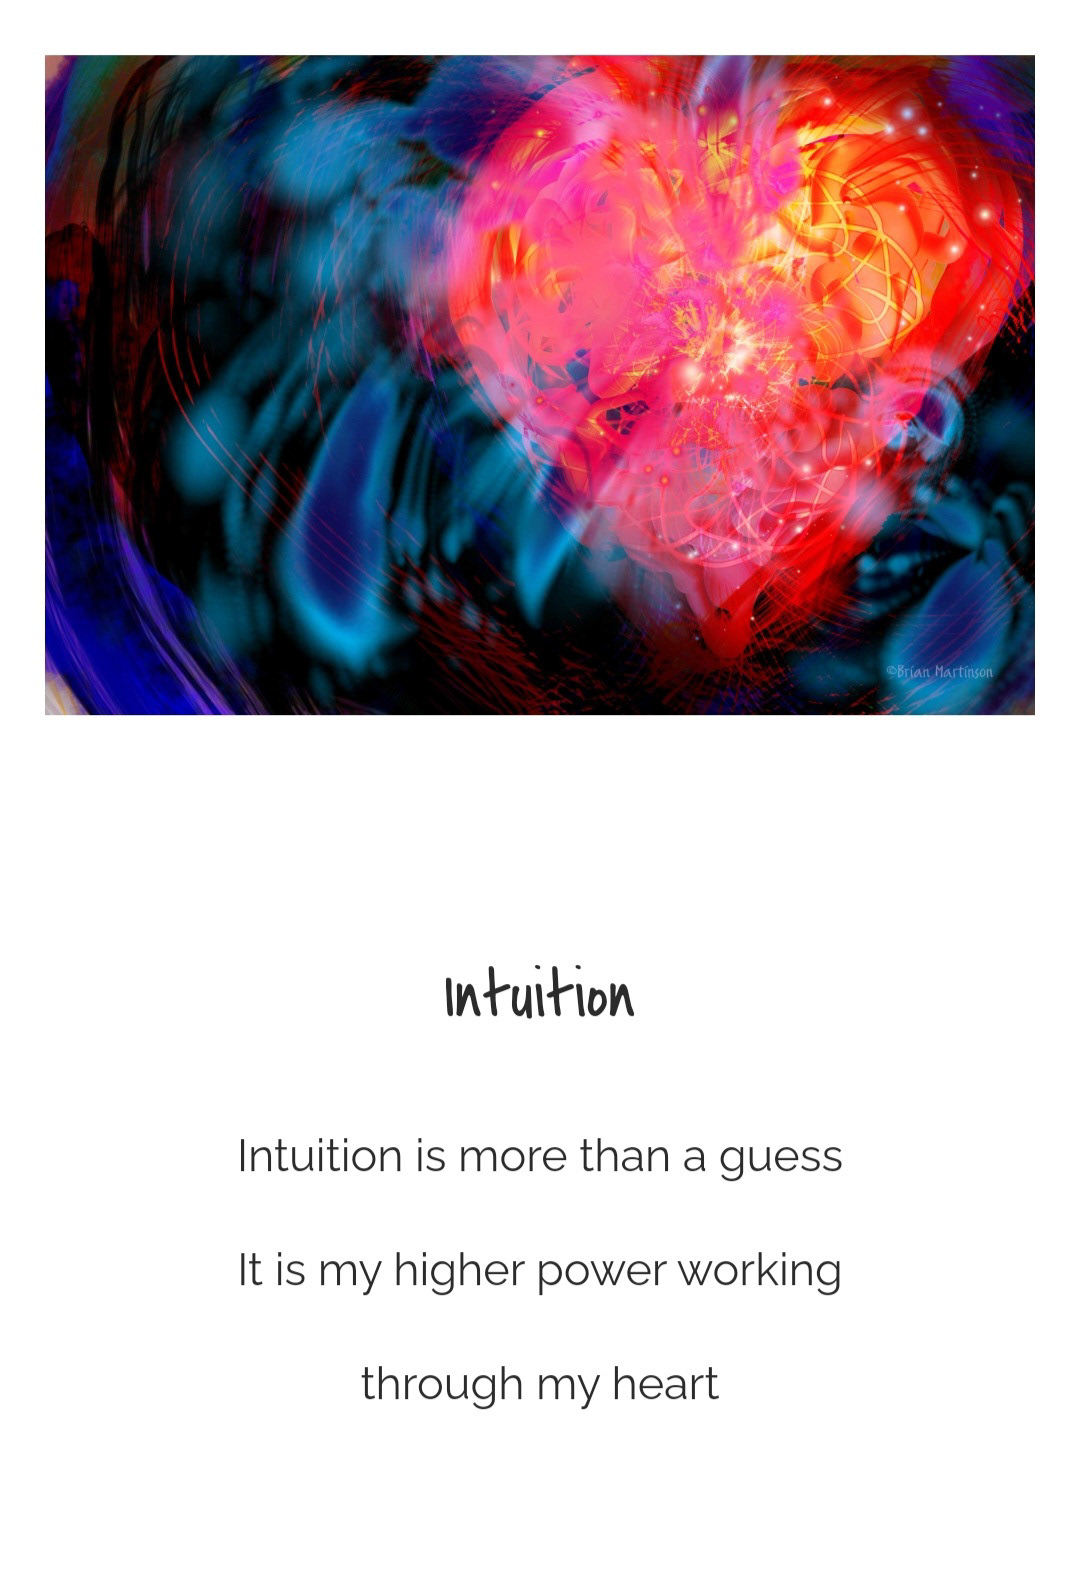 intuition heart Channel vessel conduit Love wisdom painting   арт fine art higher power